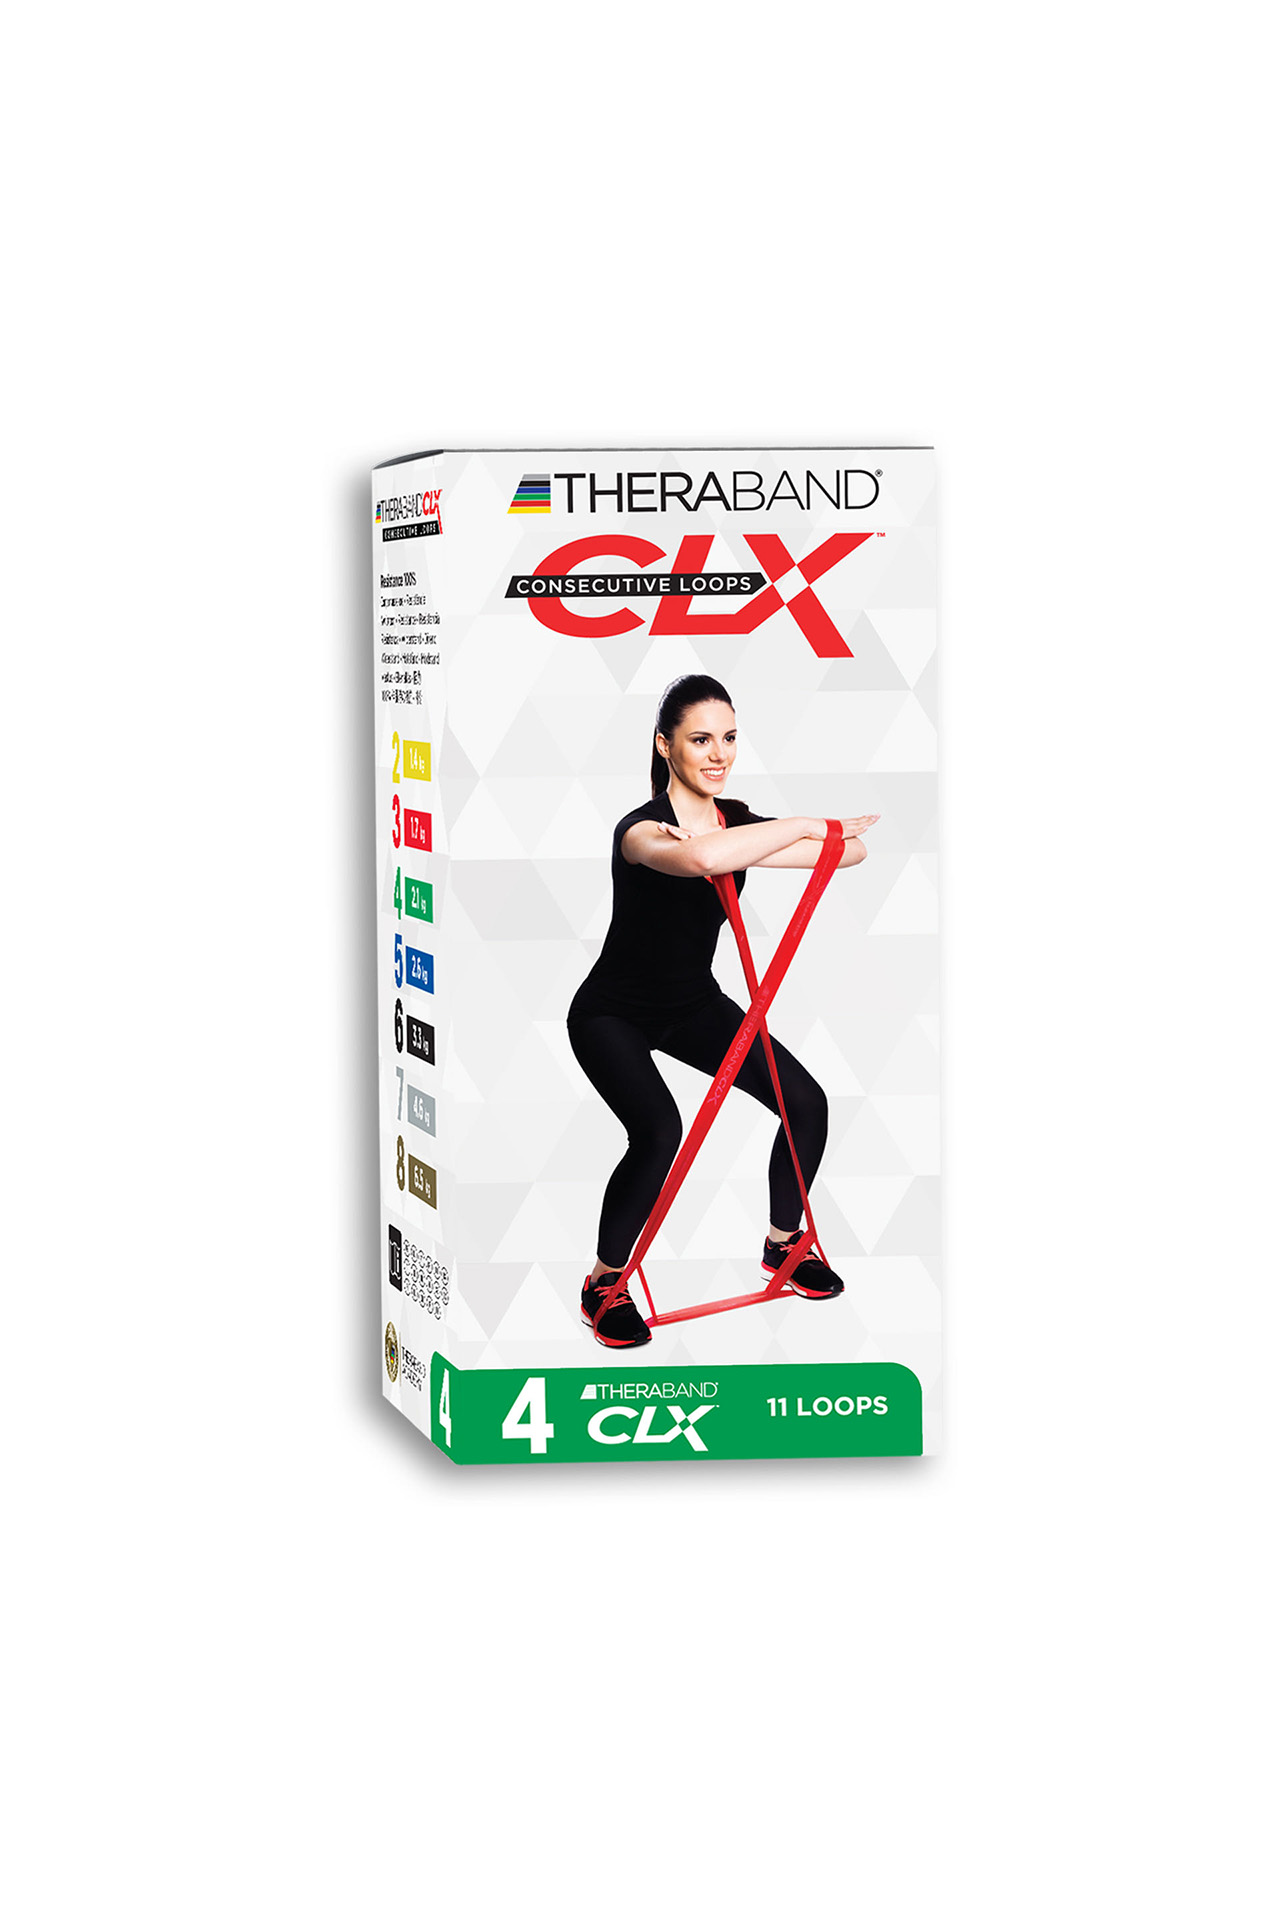 clx theraband trainingsband fitness sport fengbao kung fu wien 1080 gruen verpackung